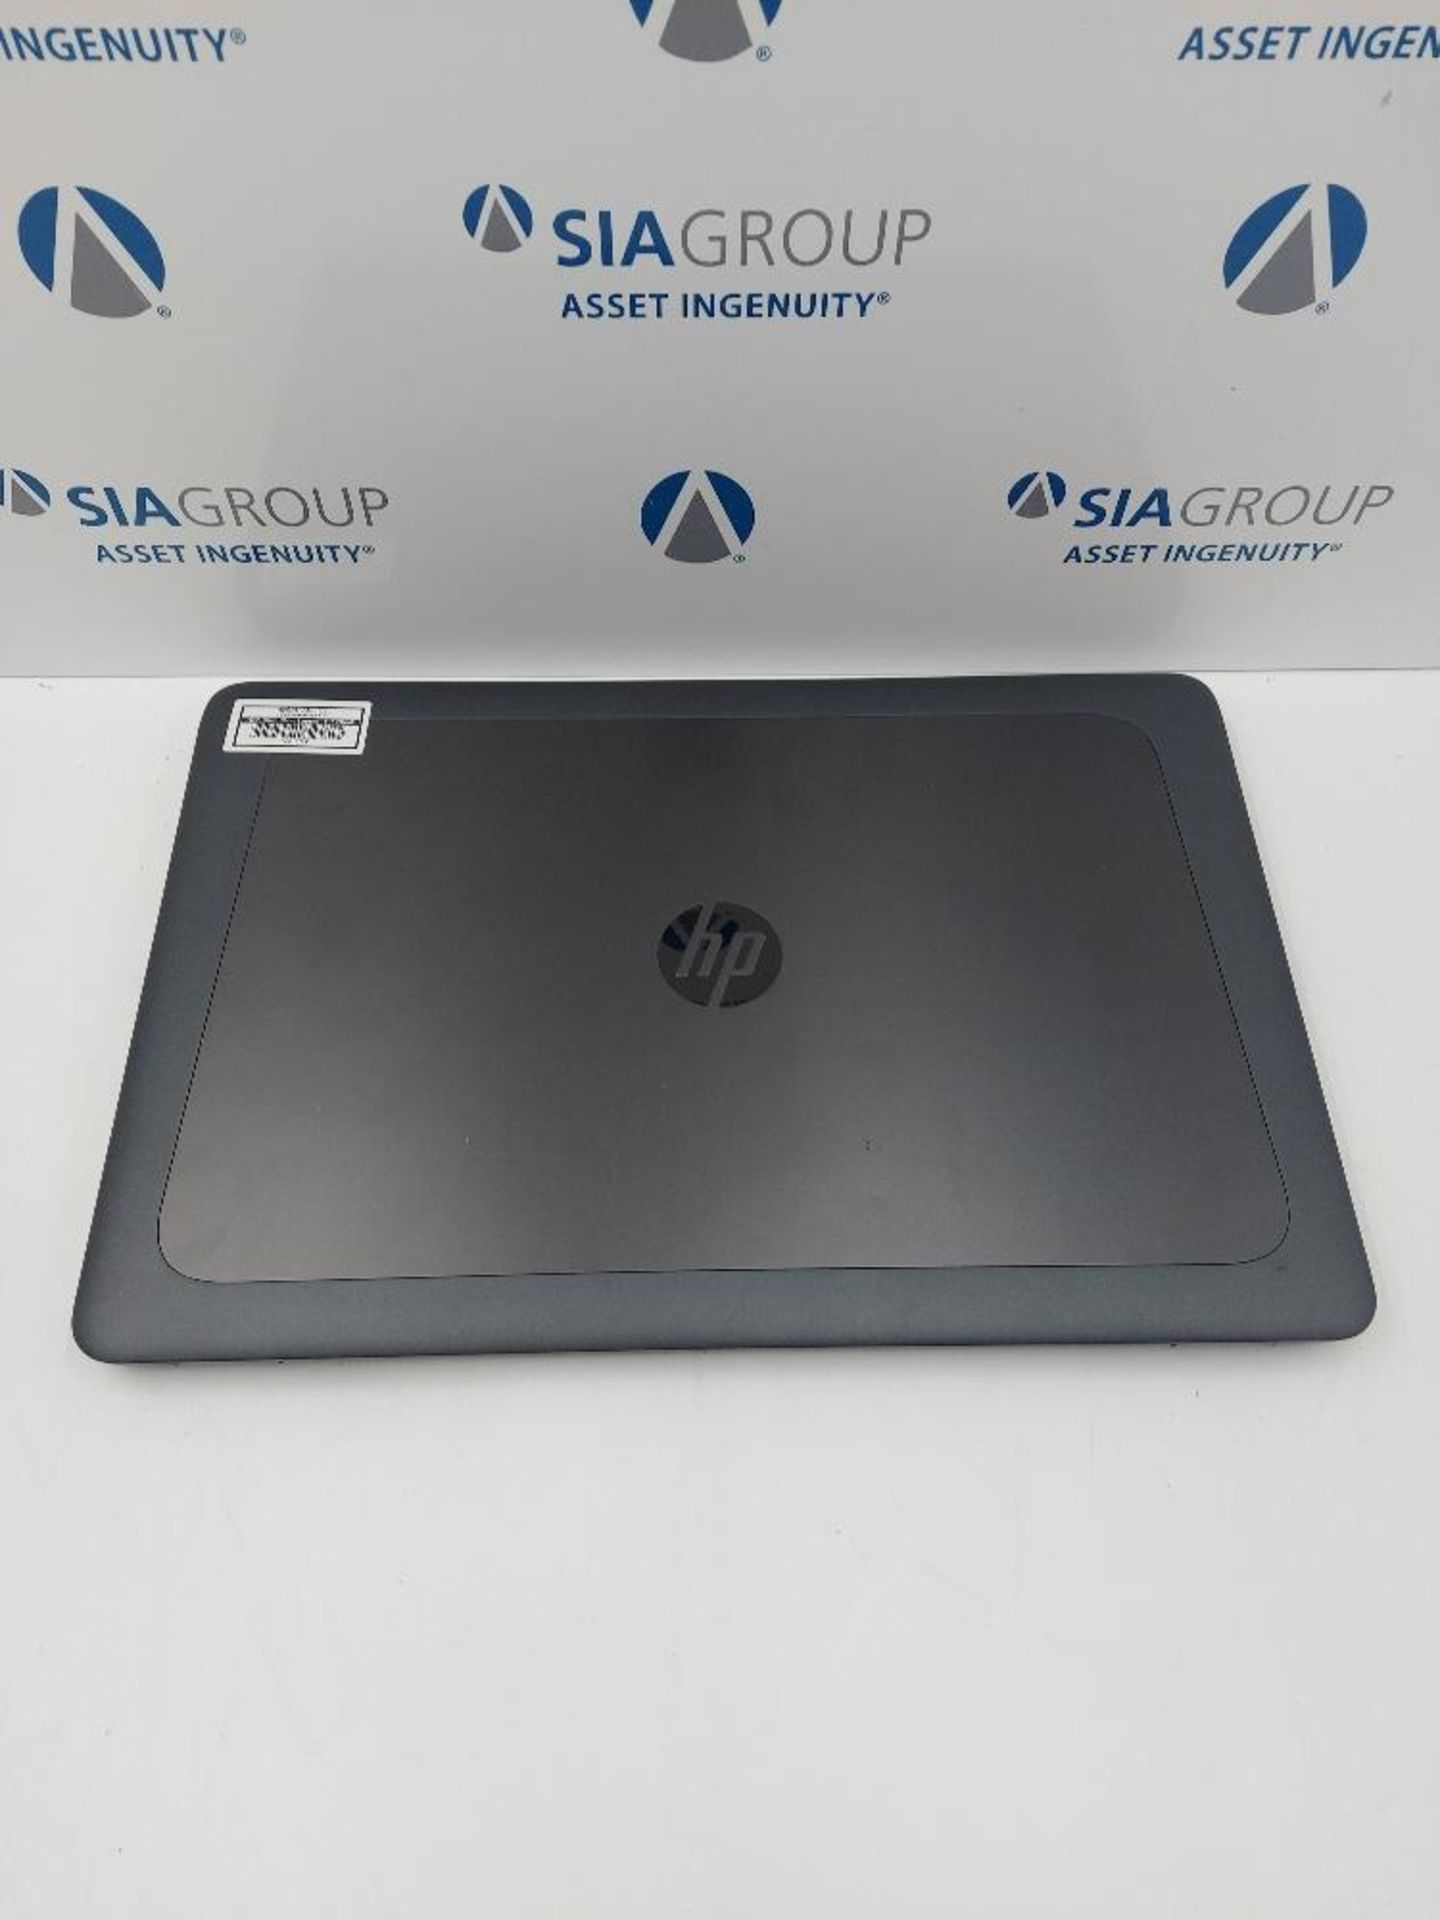 HP Zbook 15u G3 Laptop with Flight Case - Image 4 of 8